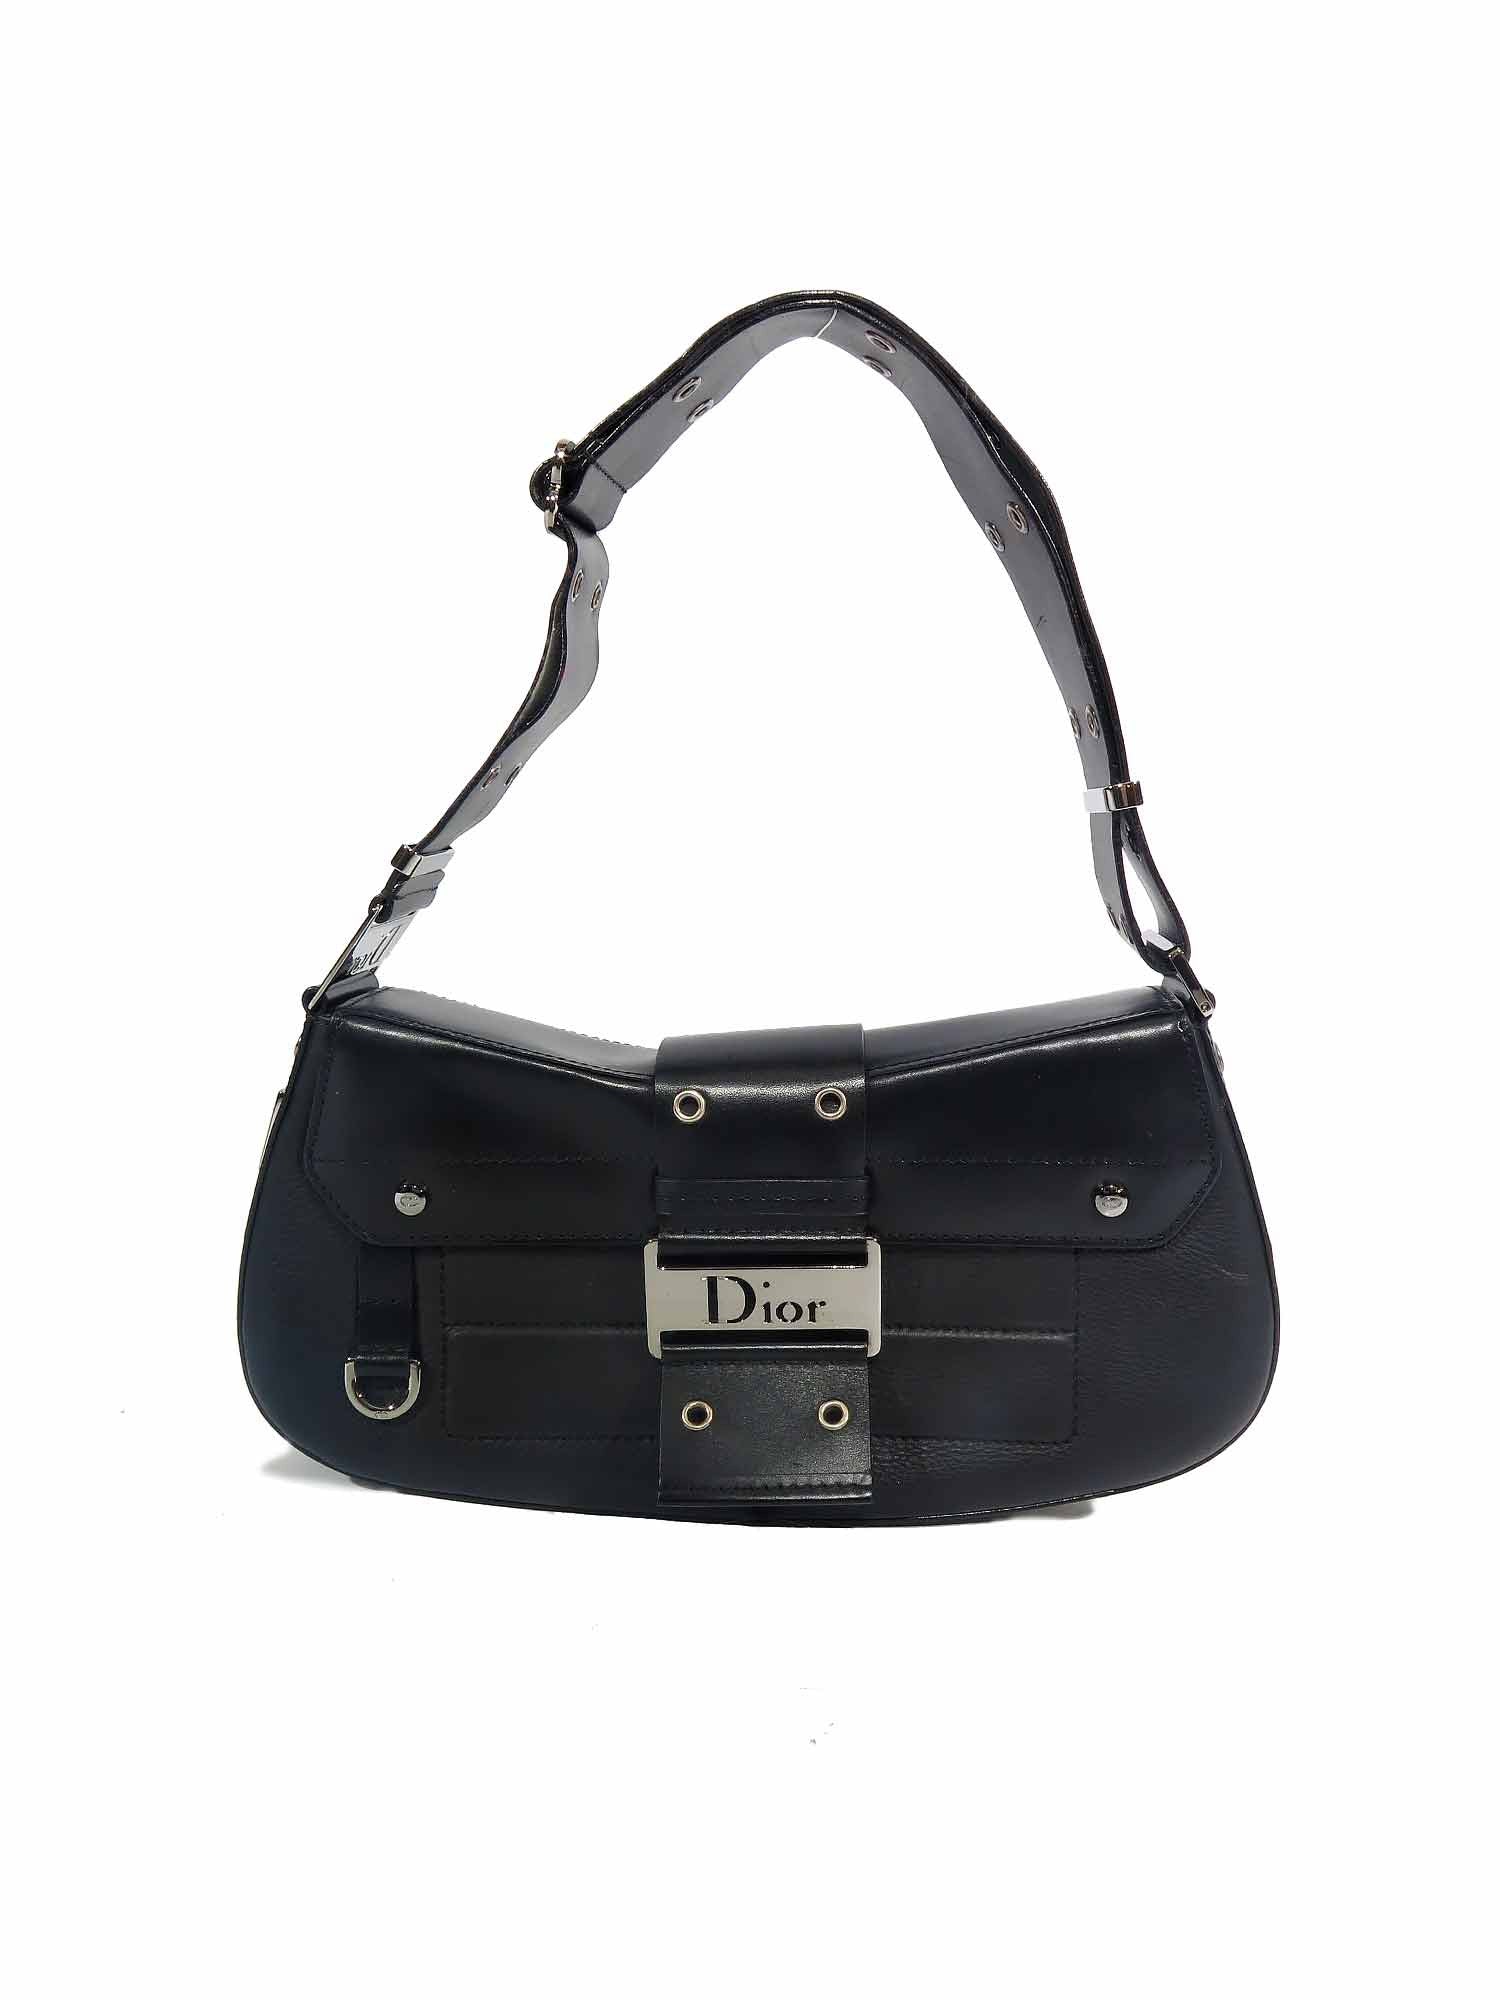 Dior Street Chic Handbag 358420  Collector Square